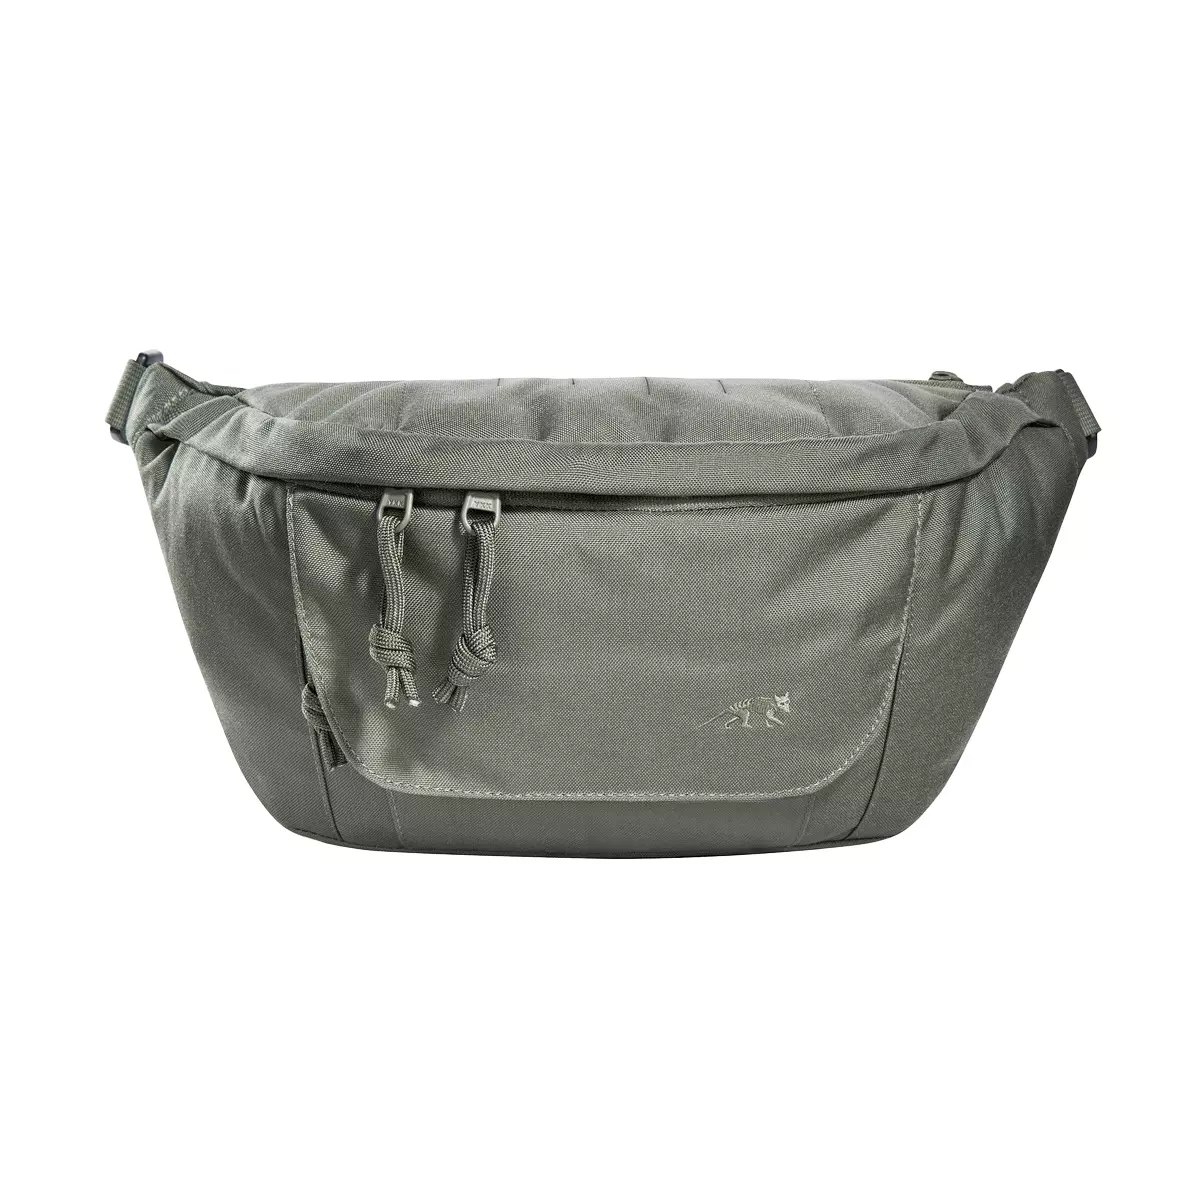 TT Modular Hip Bag 2 IRR hip bag